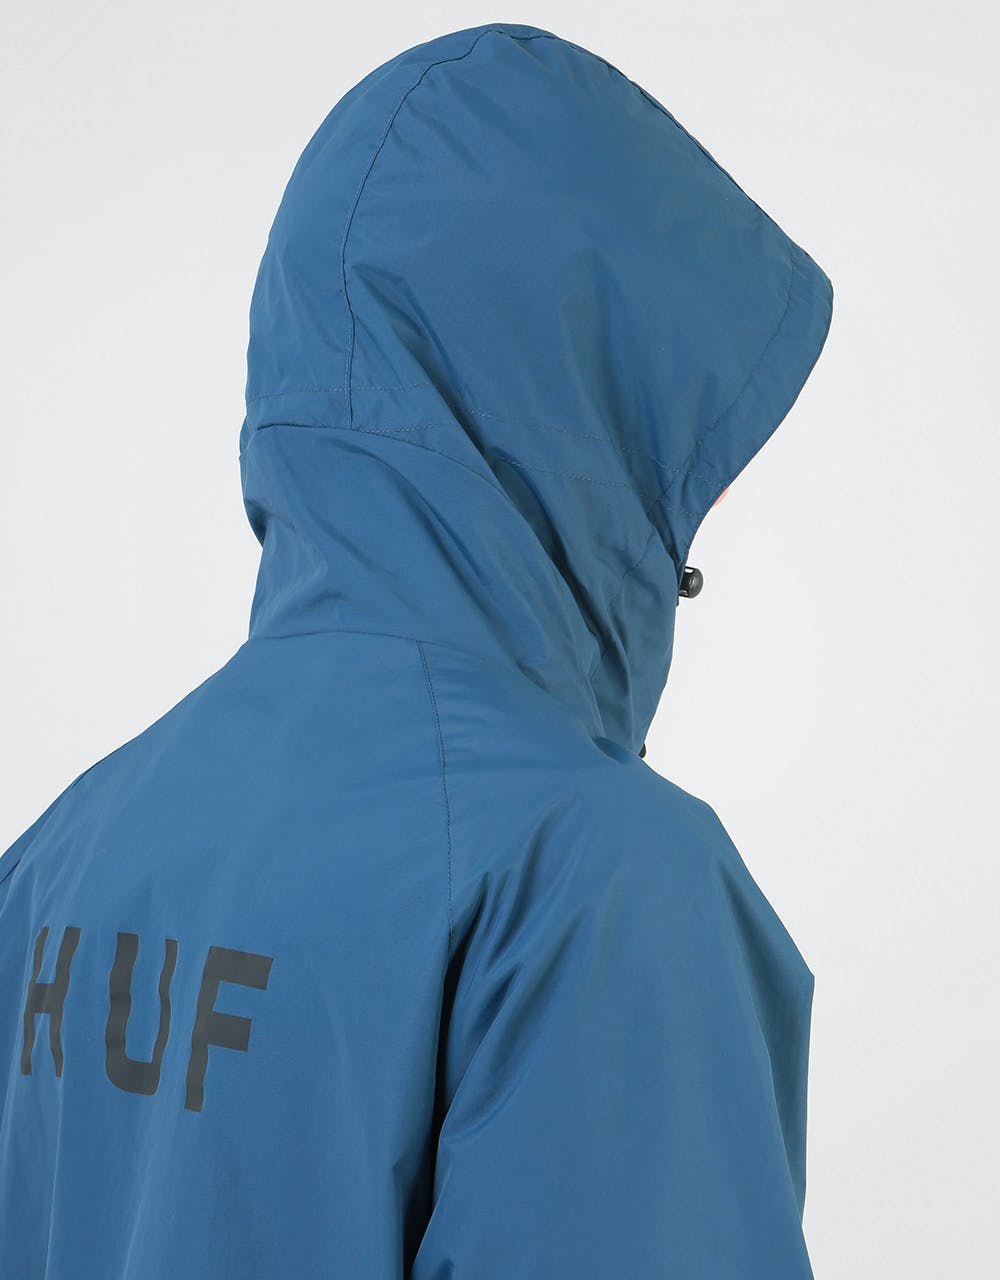 HUF Standard Shell II Jacket - Insignia Blue